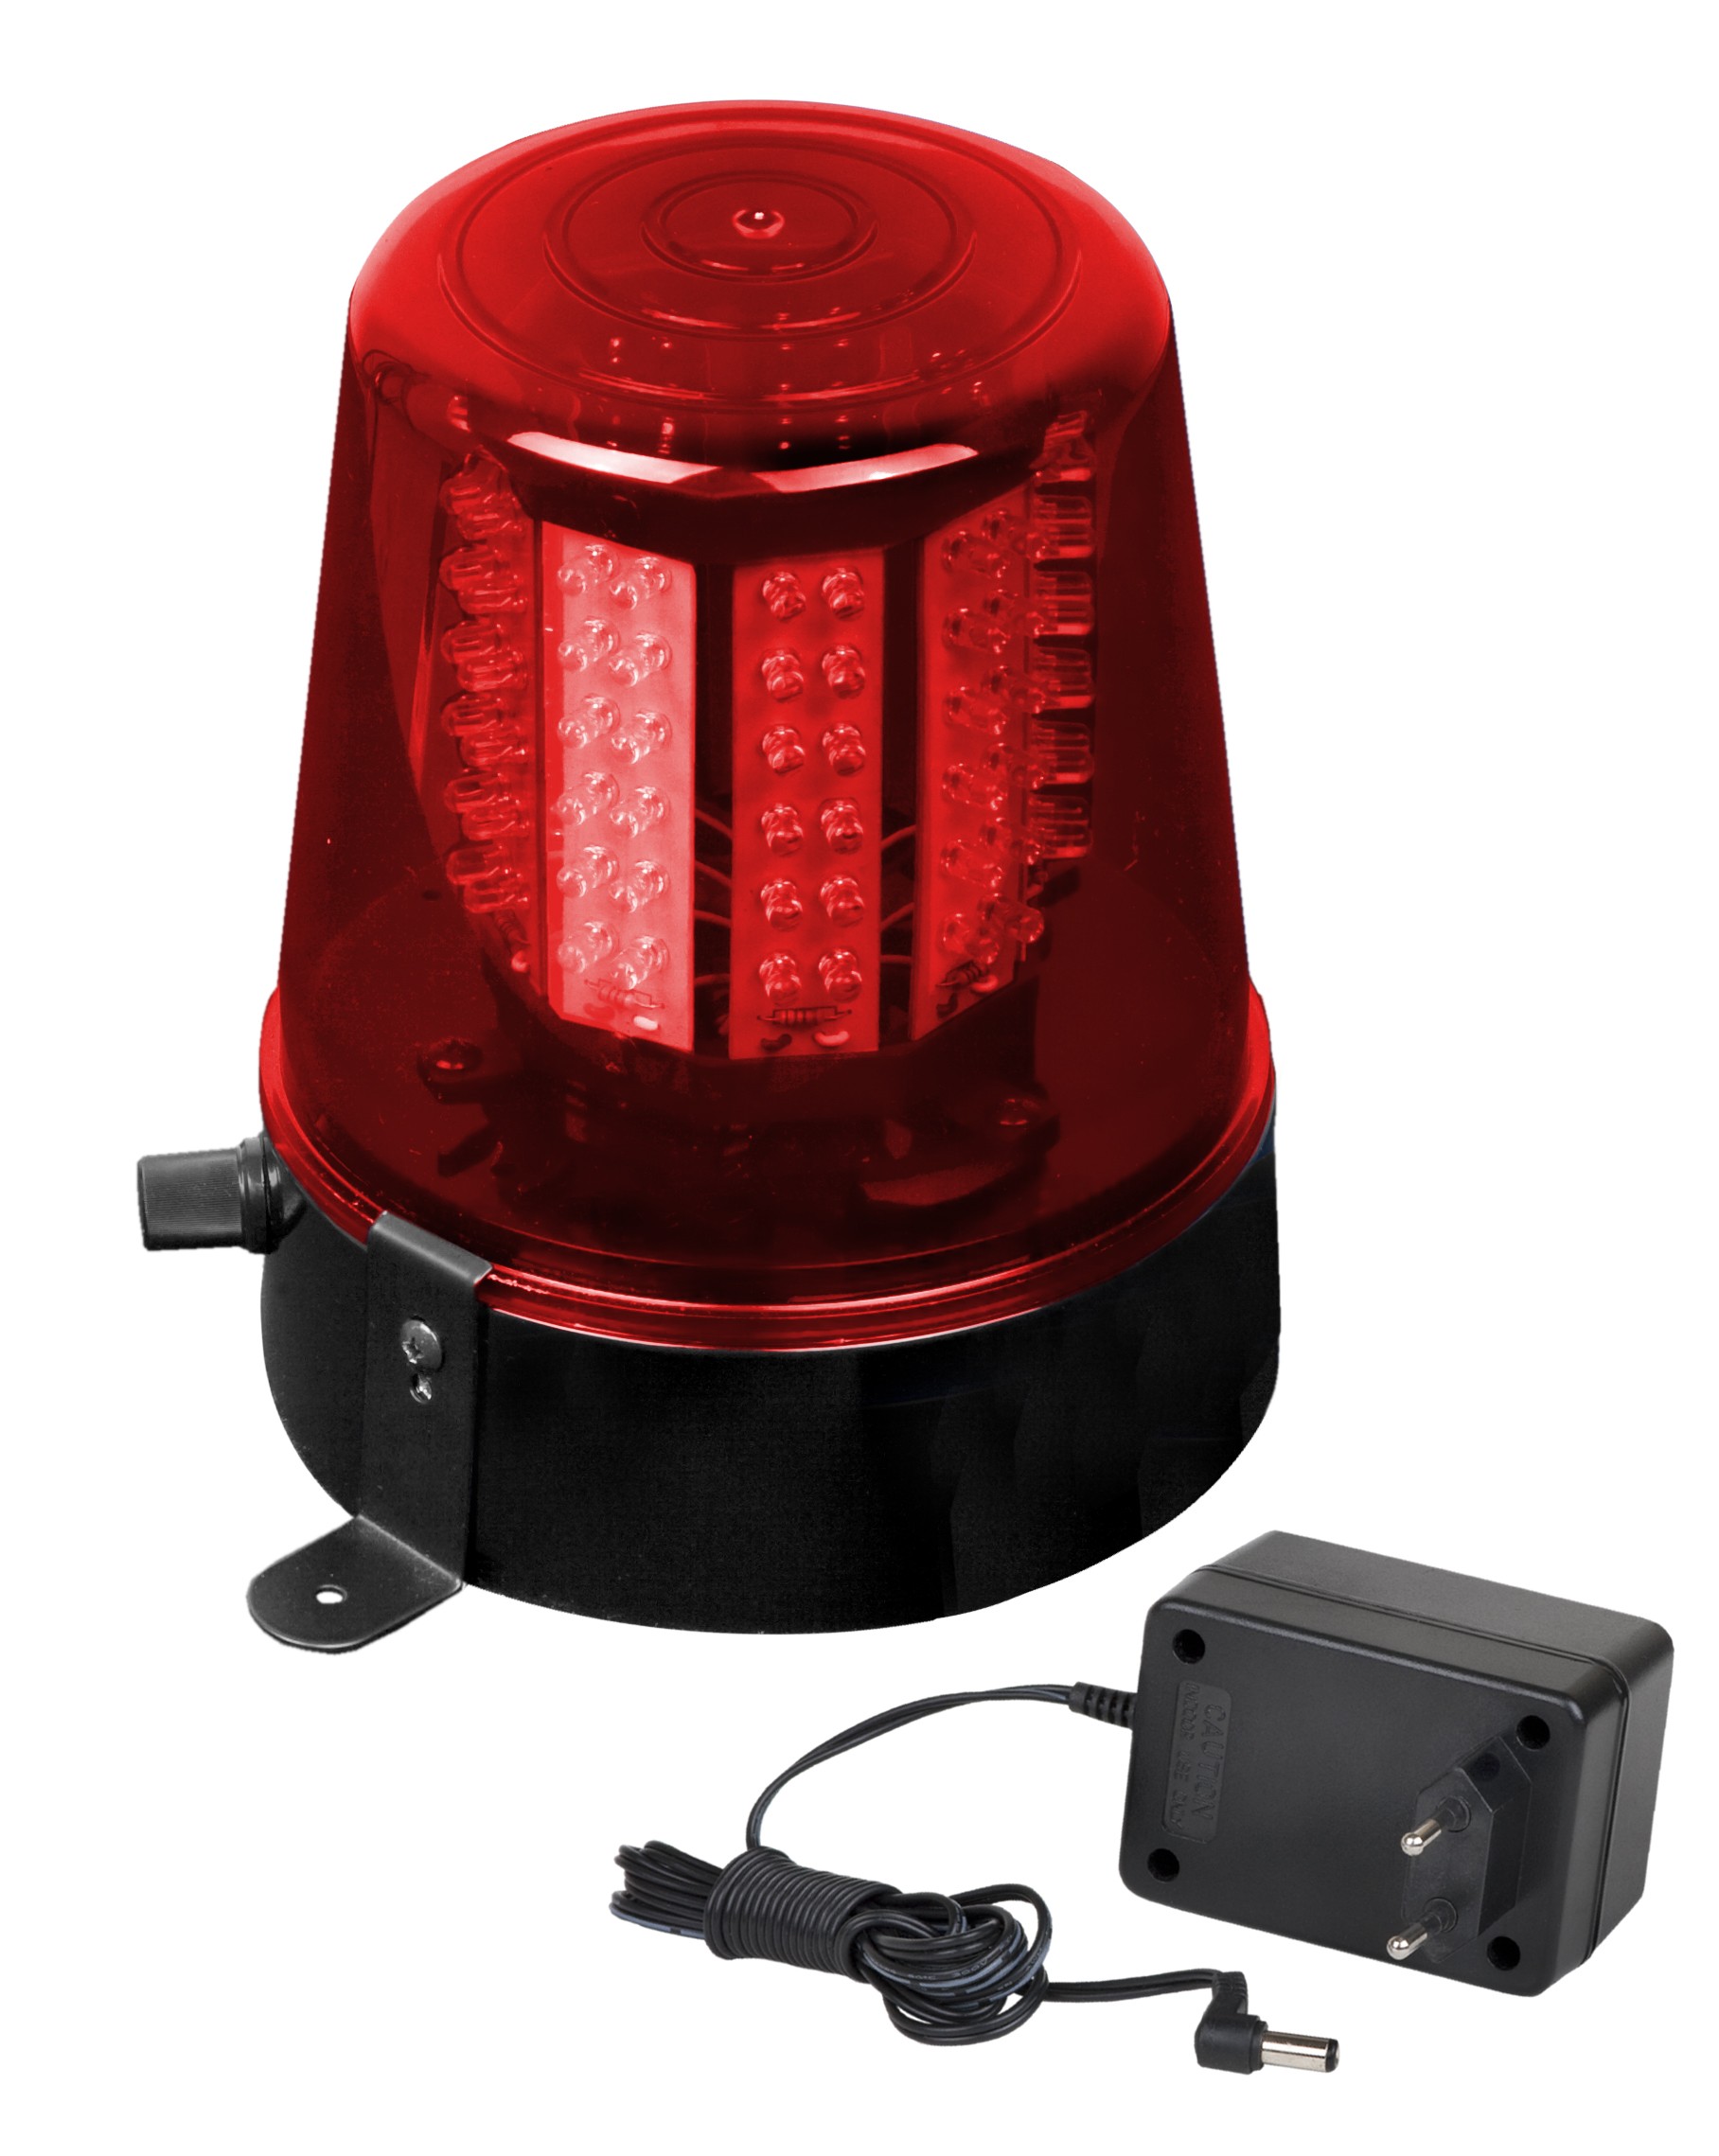 Red warning light based on 108 extremely bright LEDs